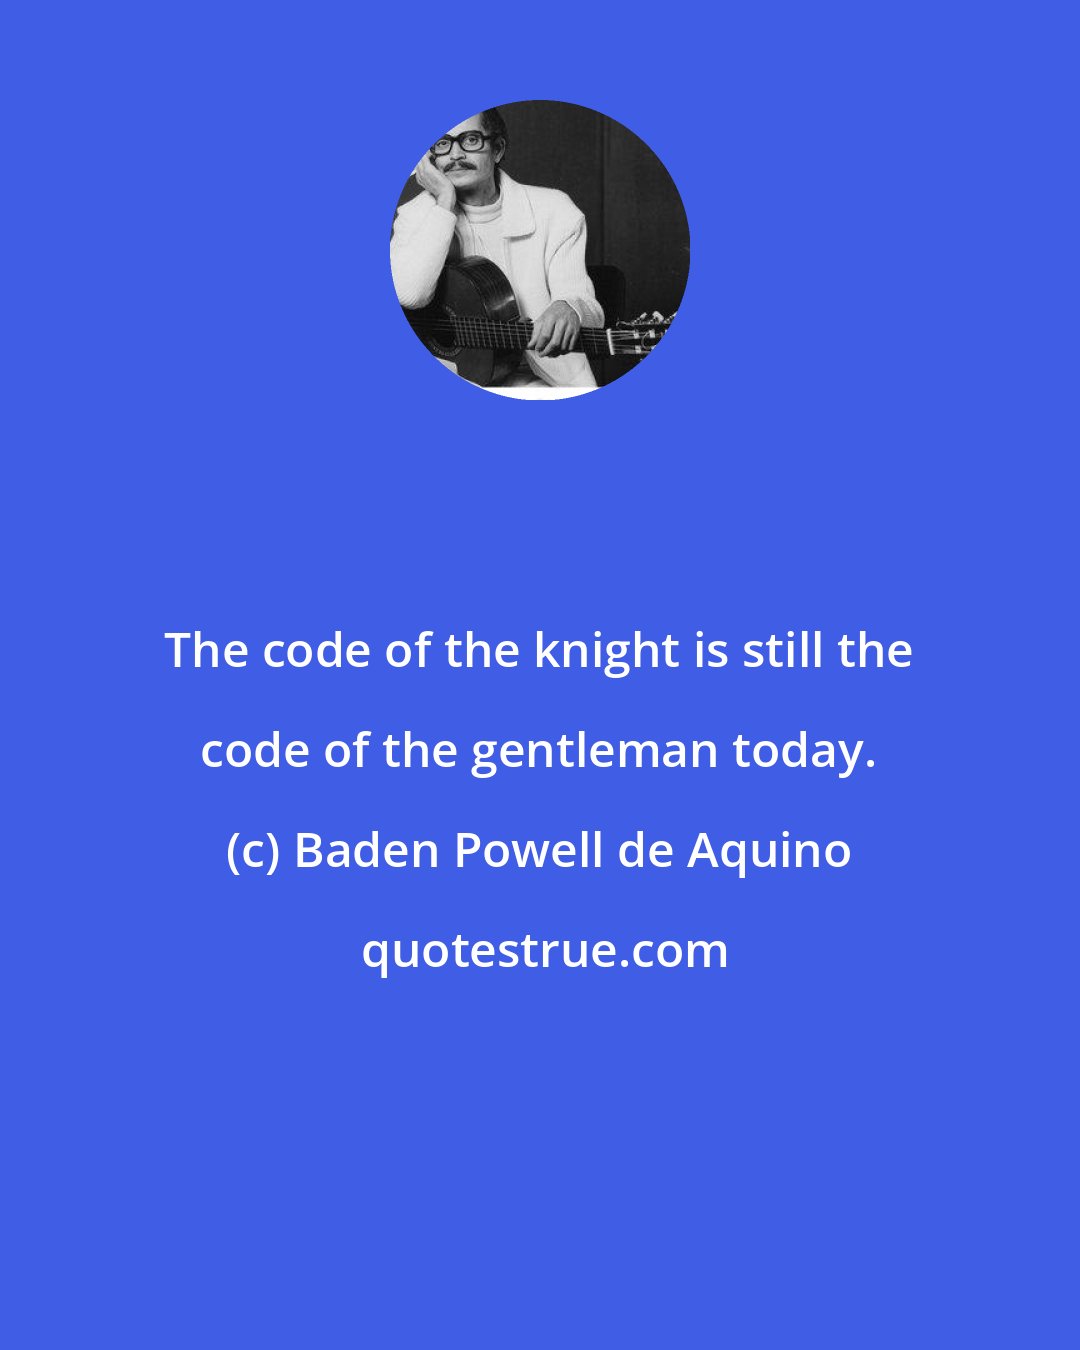 Baden Powell de Aquino: The code of the knight is still the code of the gentleman today.